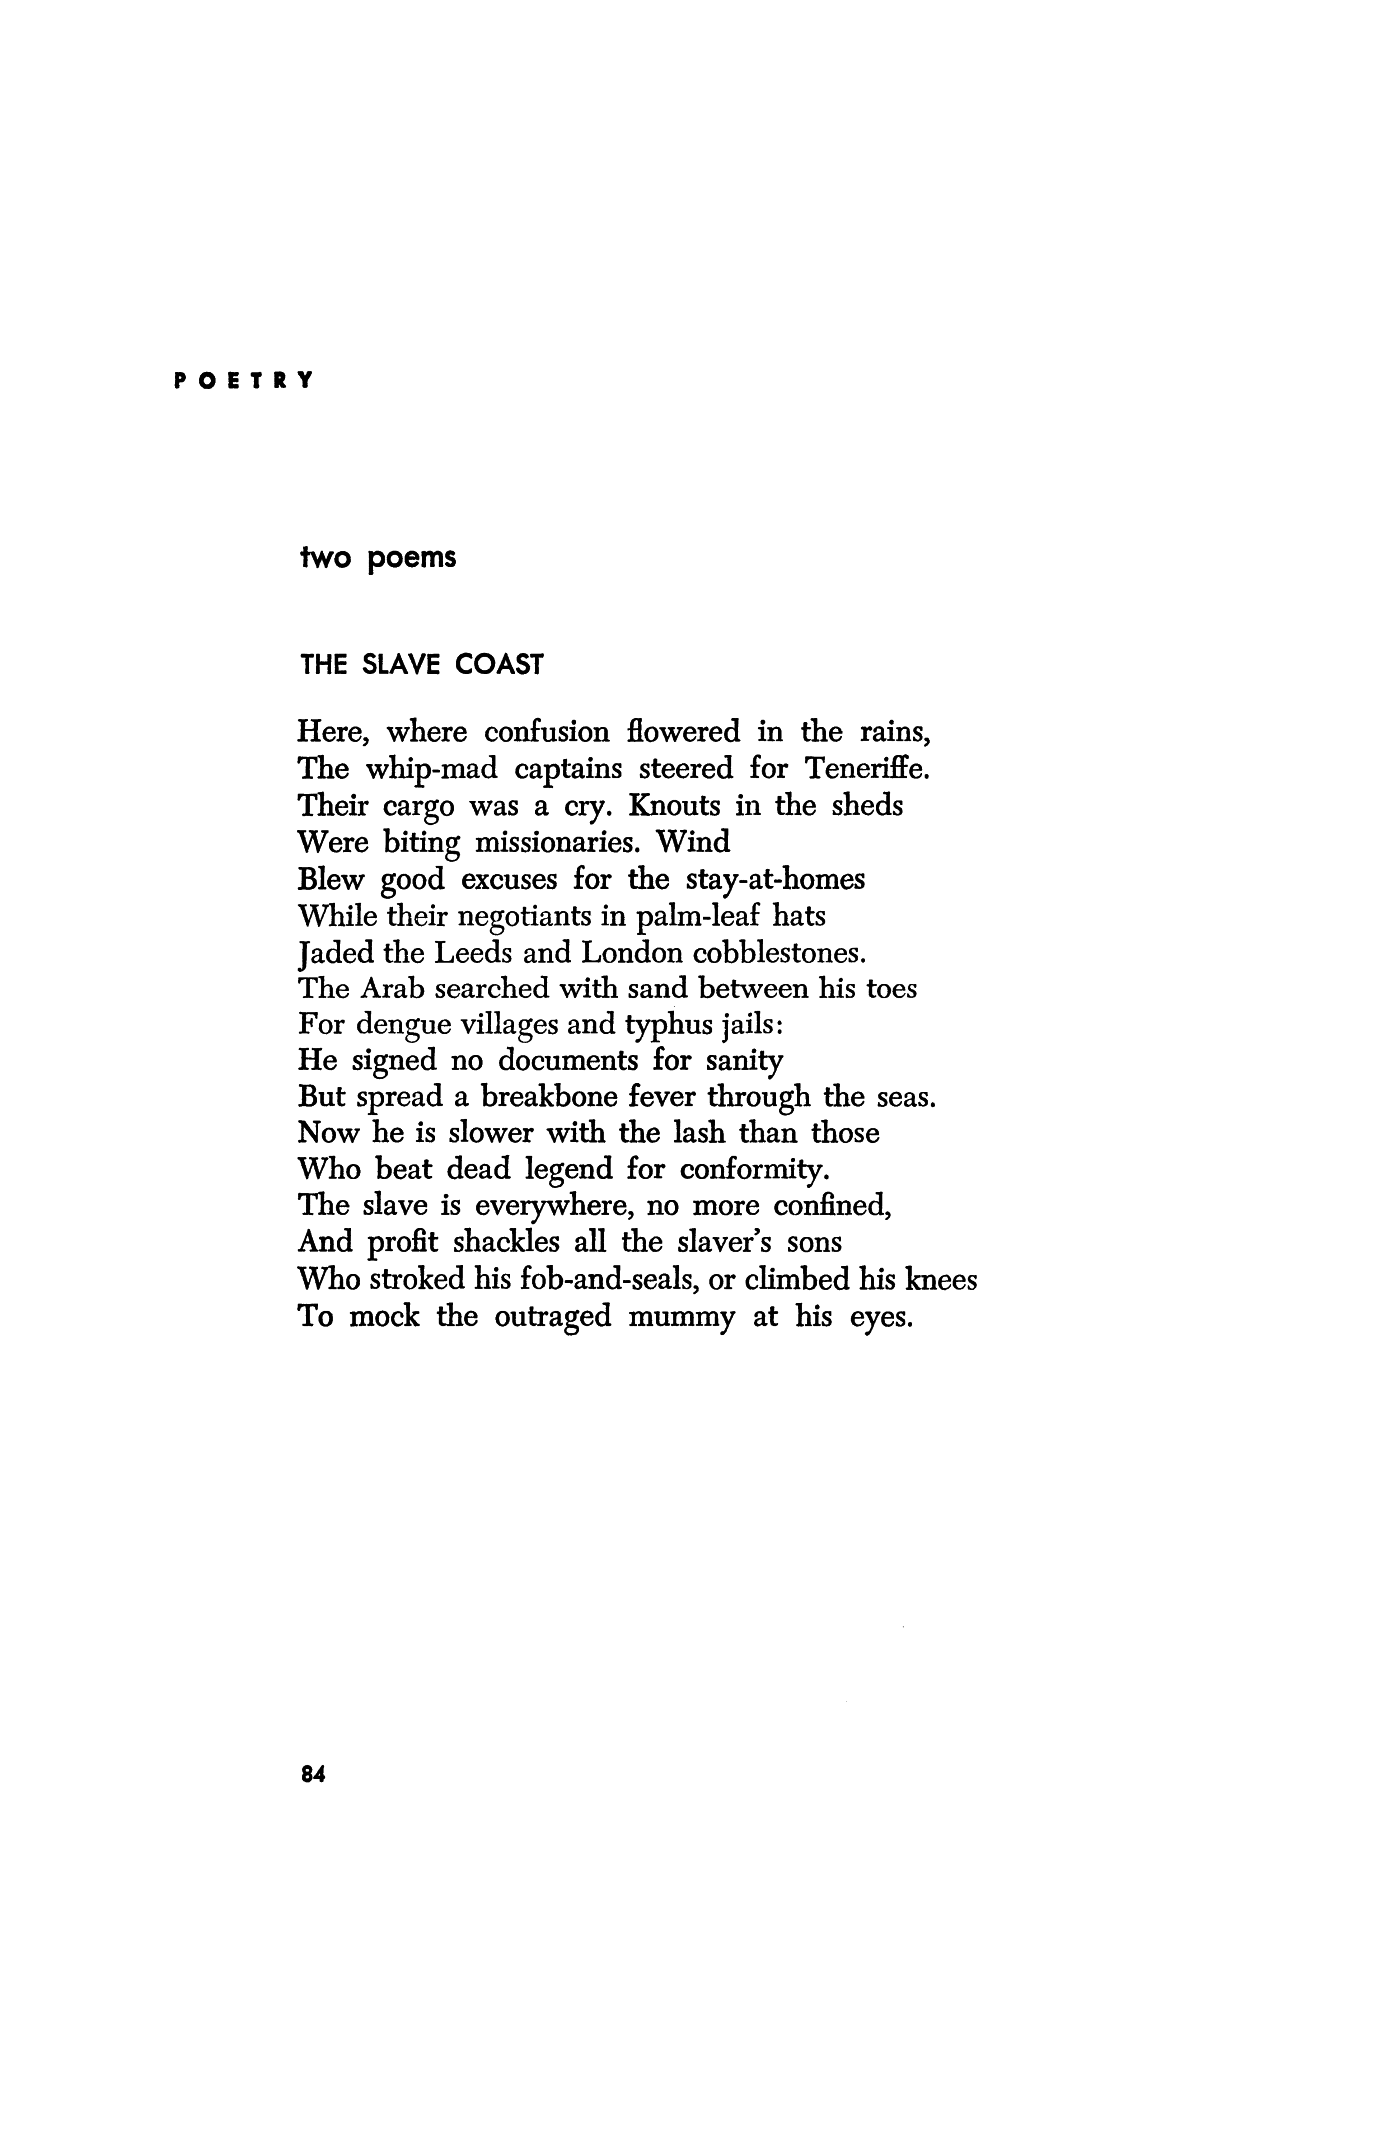 slavery poems